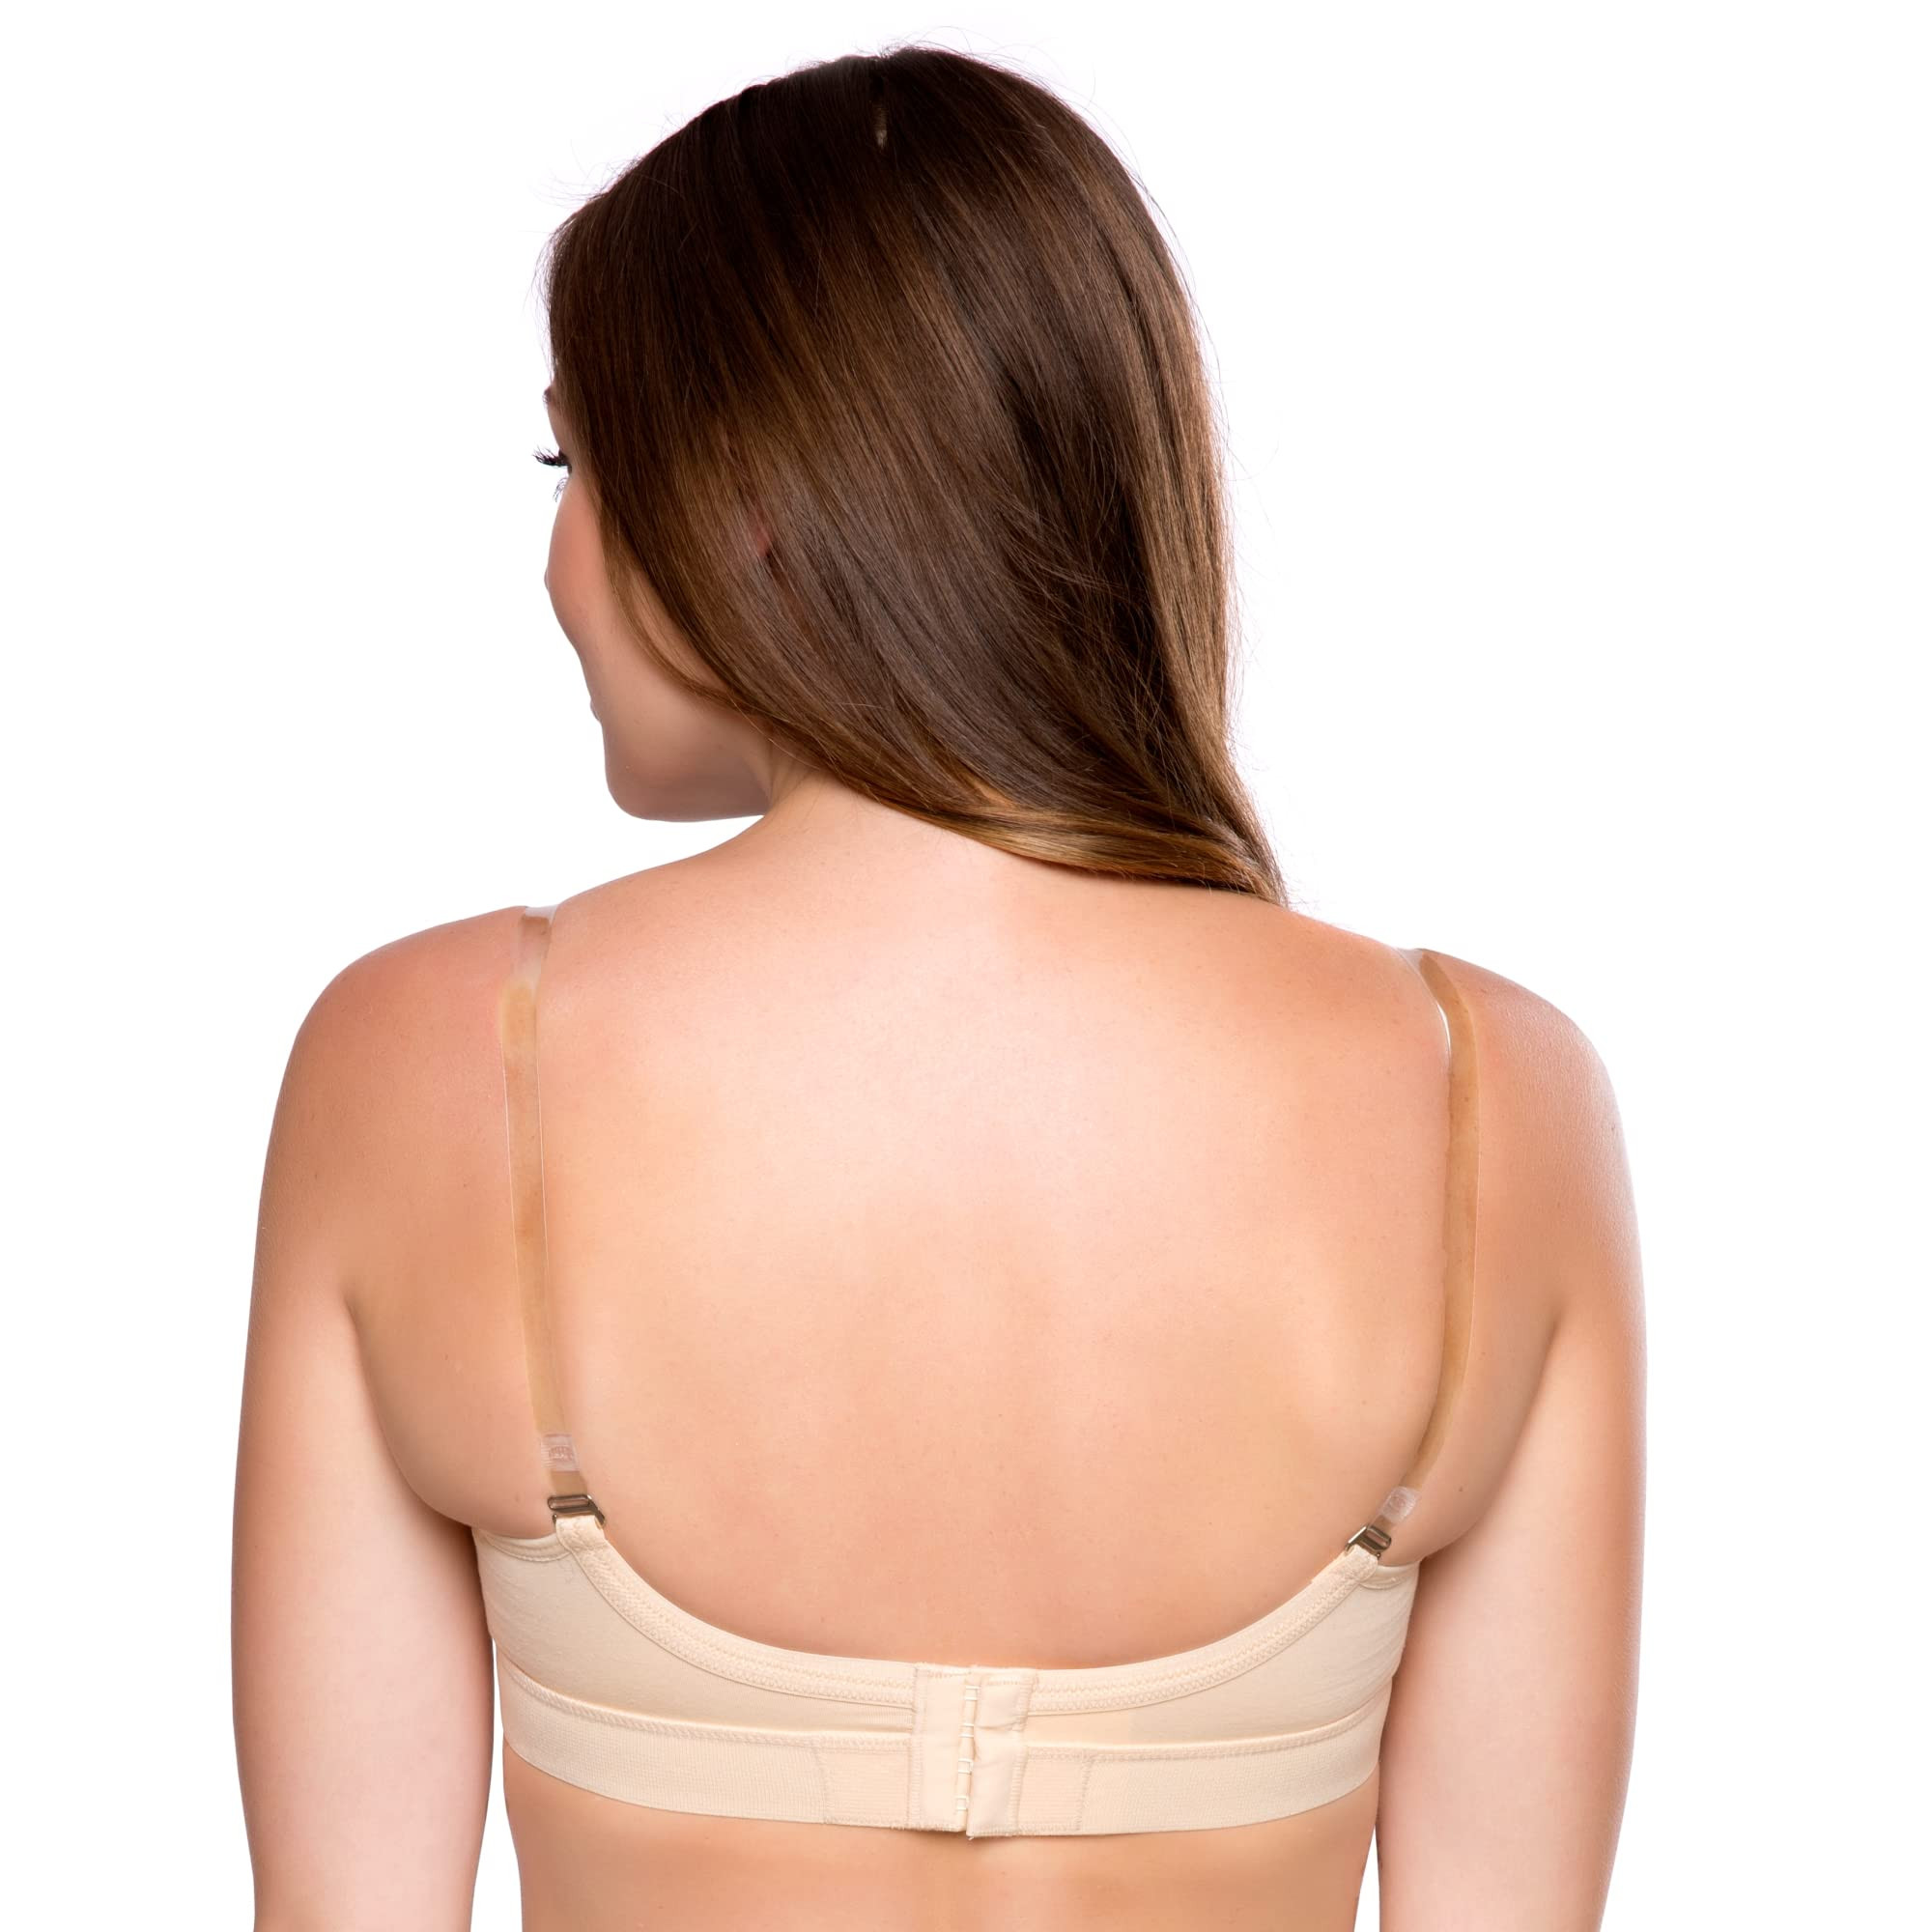 TRYLO ALPA Strapless Women's Bra Hoisery Cotton C-Cup Skin 44,Size 44C